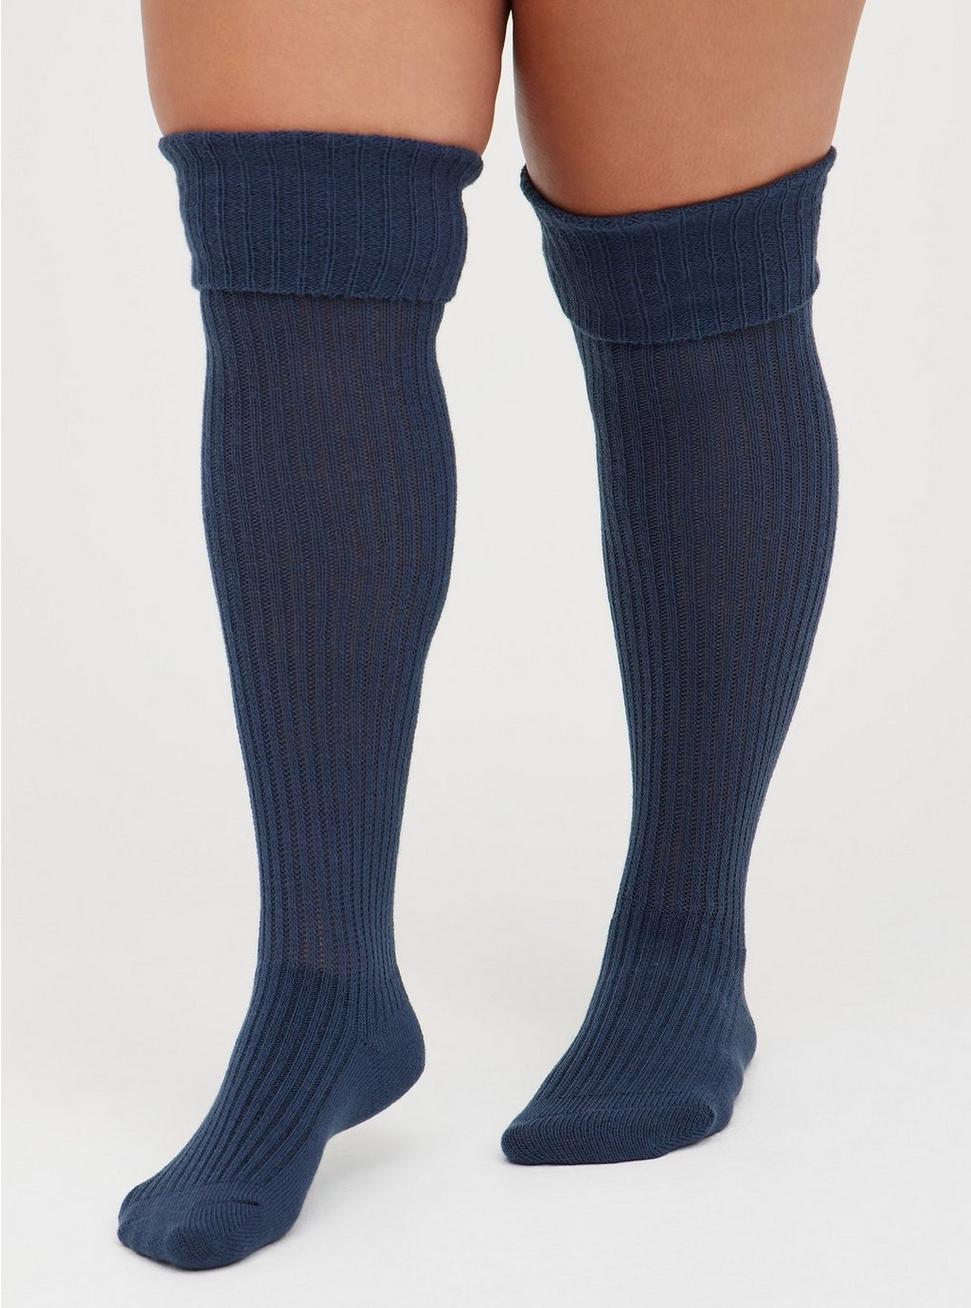 chris smale recommends Torrid Knee High Socks